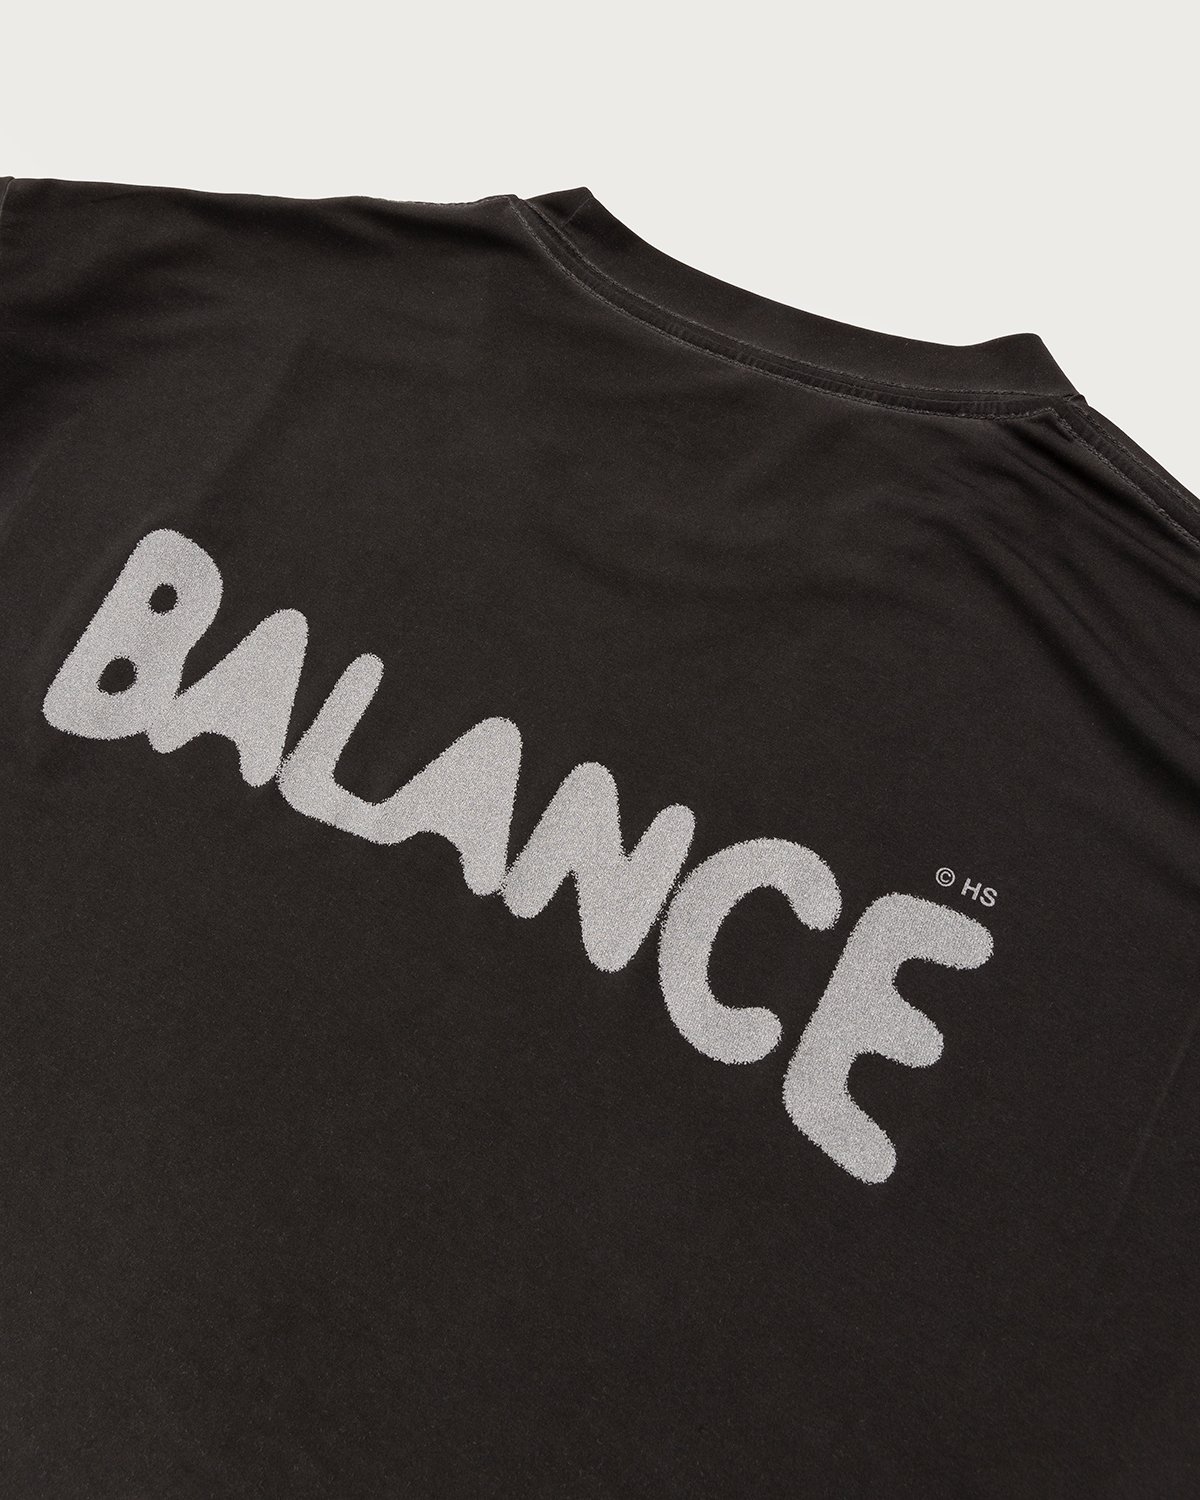 Satisfy x Highsnobiety - HS Sports Balance T-Shirt Black Pigment - Clothing - Grey - Image 3